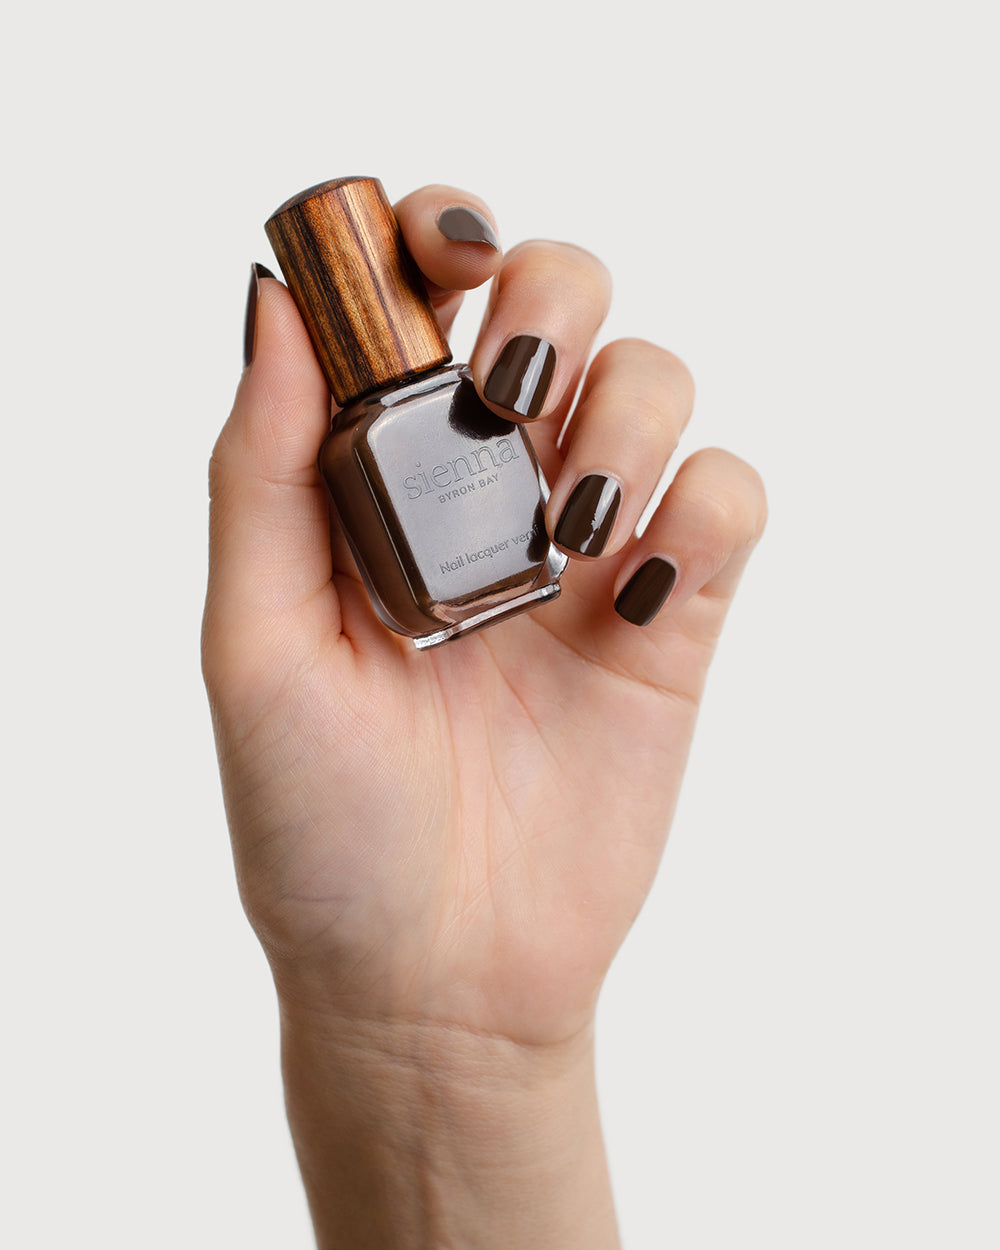 chocolate brown nail polish hand swatch on fair skin tone holding sienna bottle